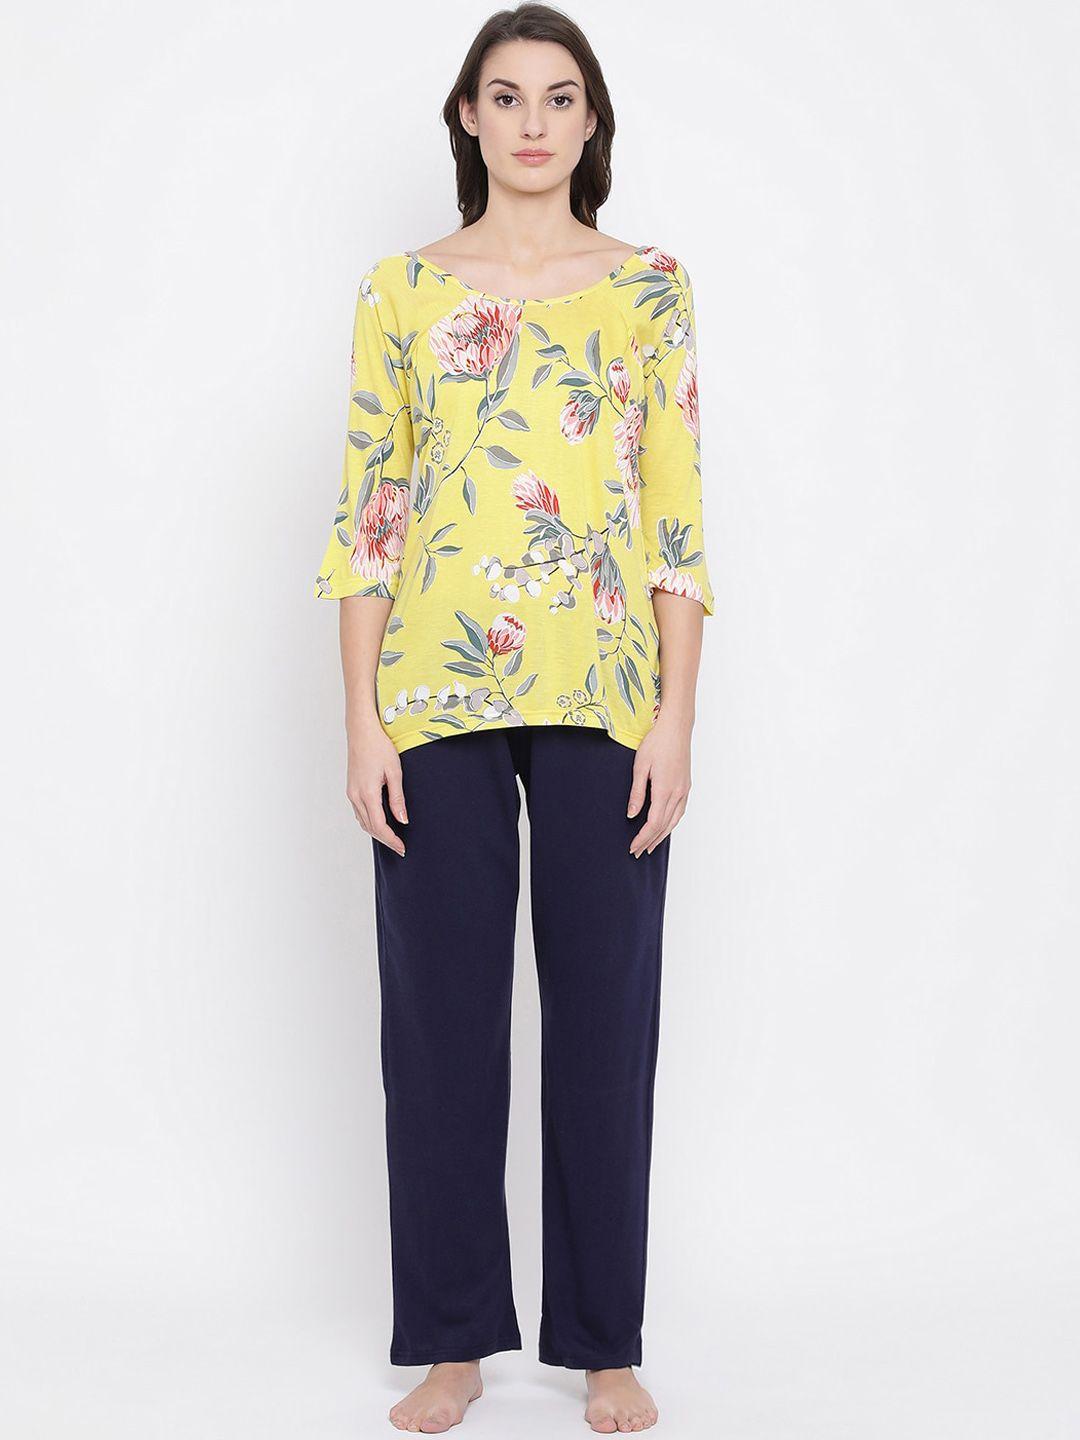 clovia-floral-printed-top-&-pyjama